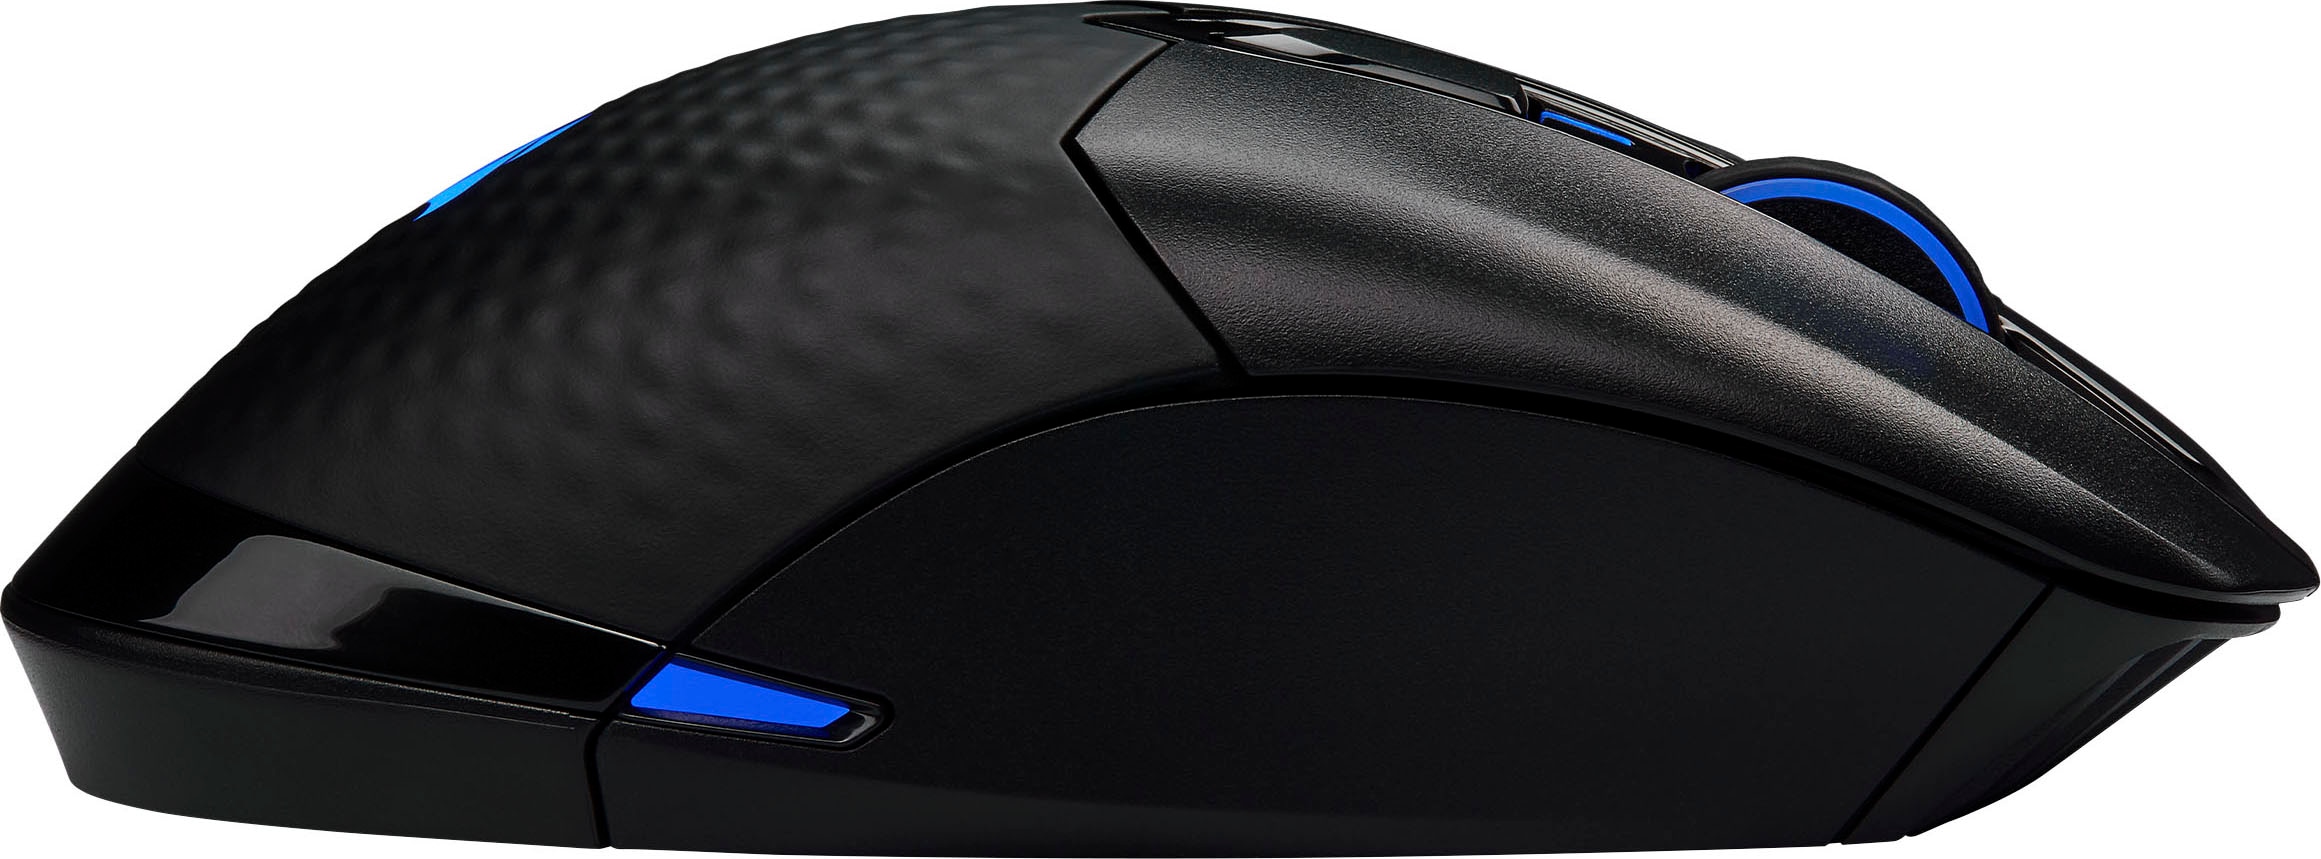 Corsair Gaming-Maus »DARK CORE RGB PRO Gaming Mouse DARK CORE RGB PRO«